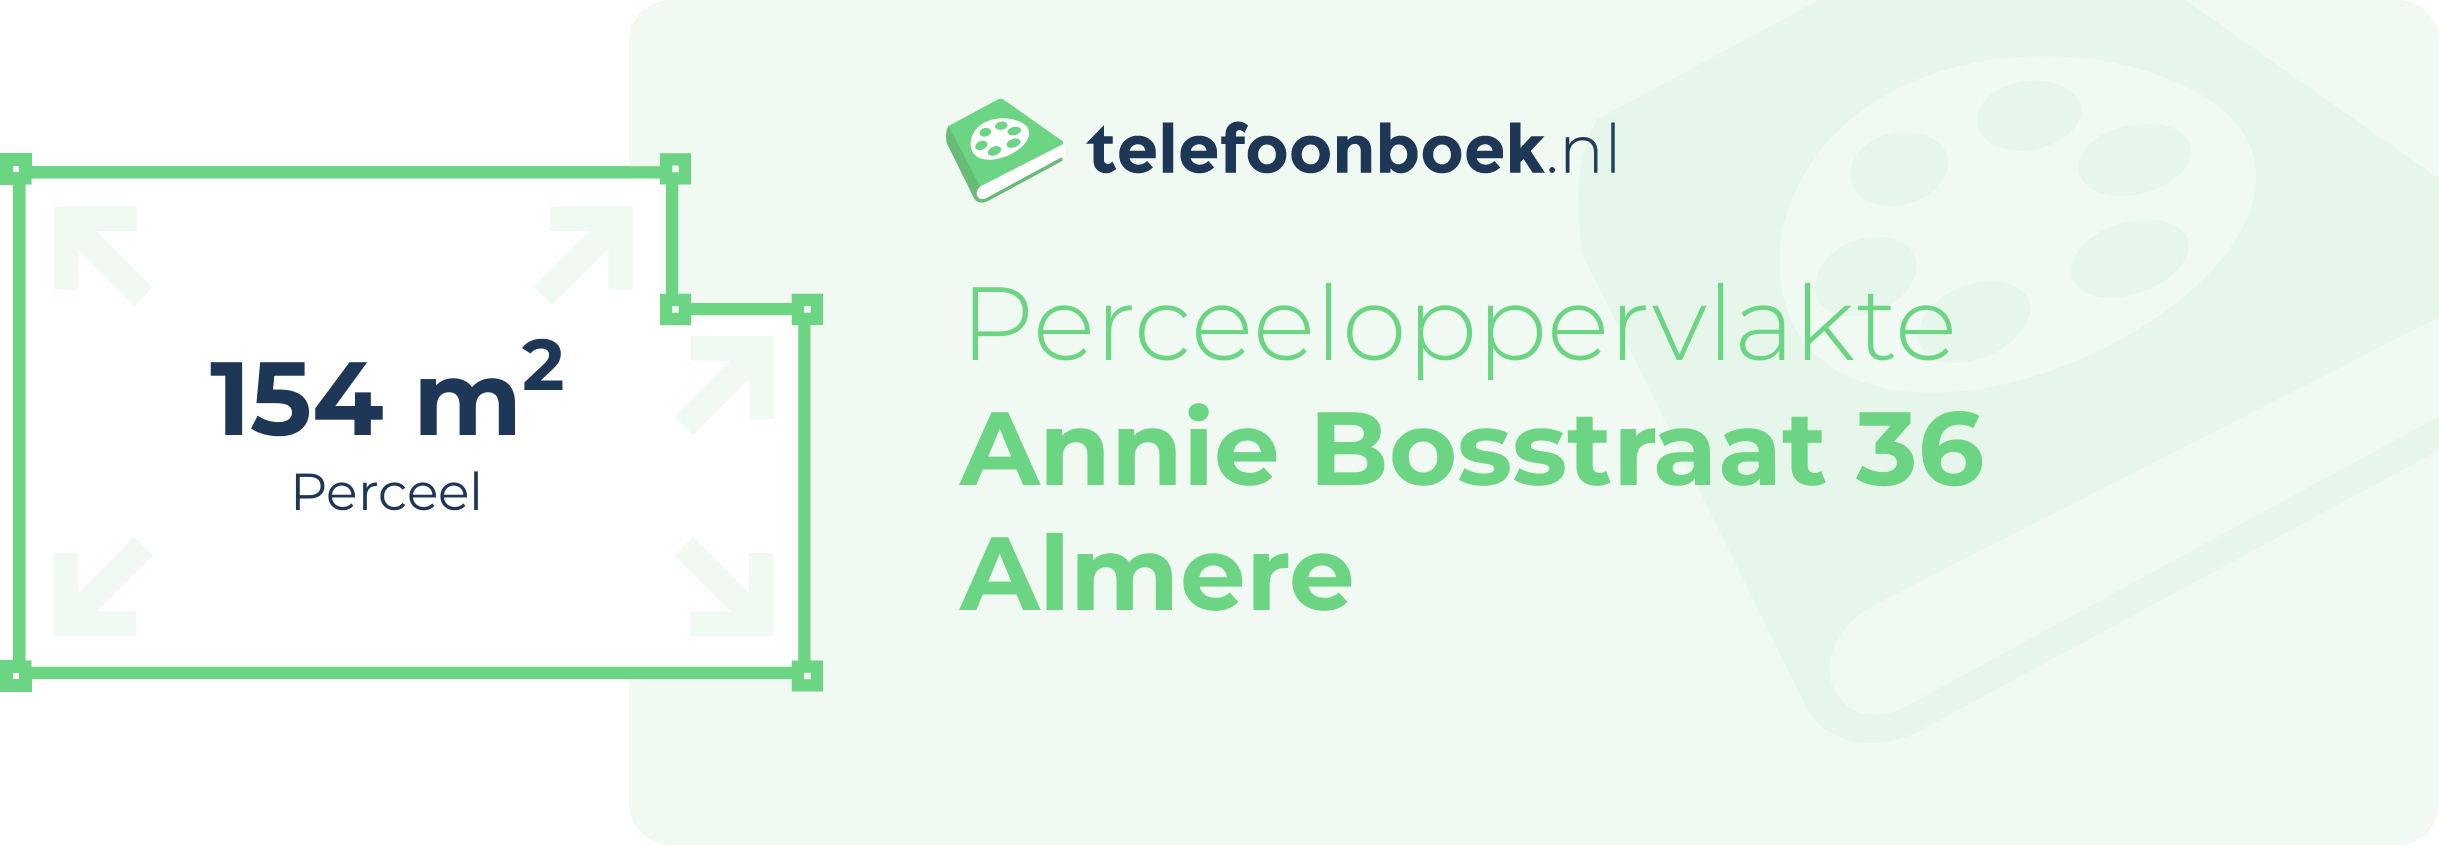 Perceeloppervlakte Annie Bosstraat 36 Almere